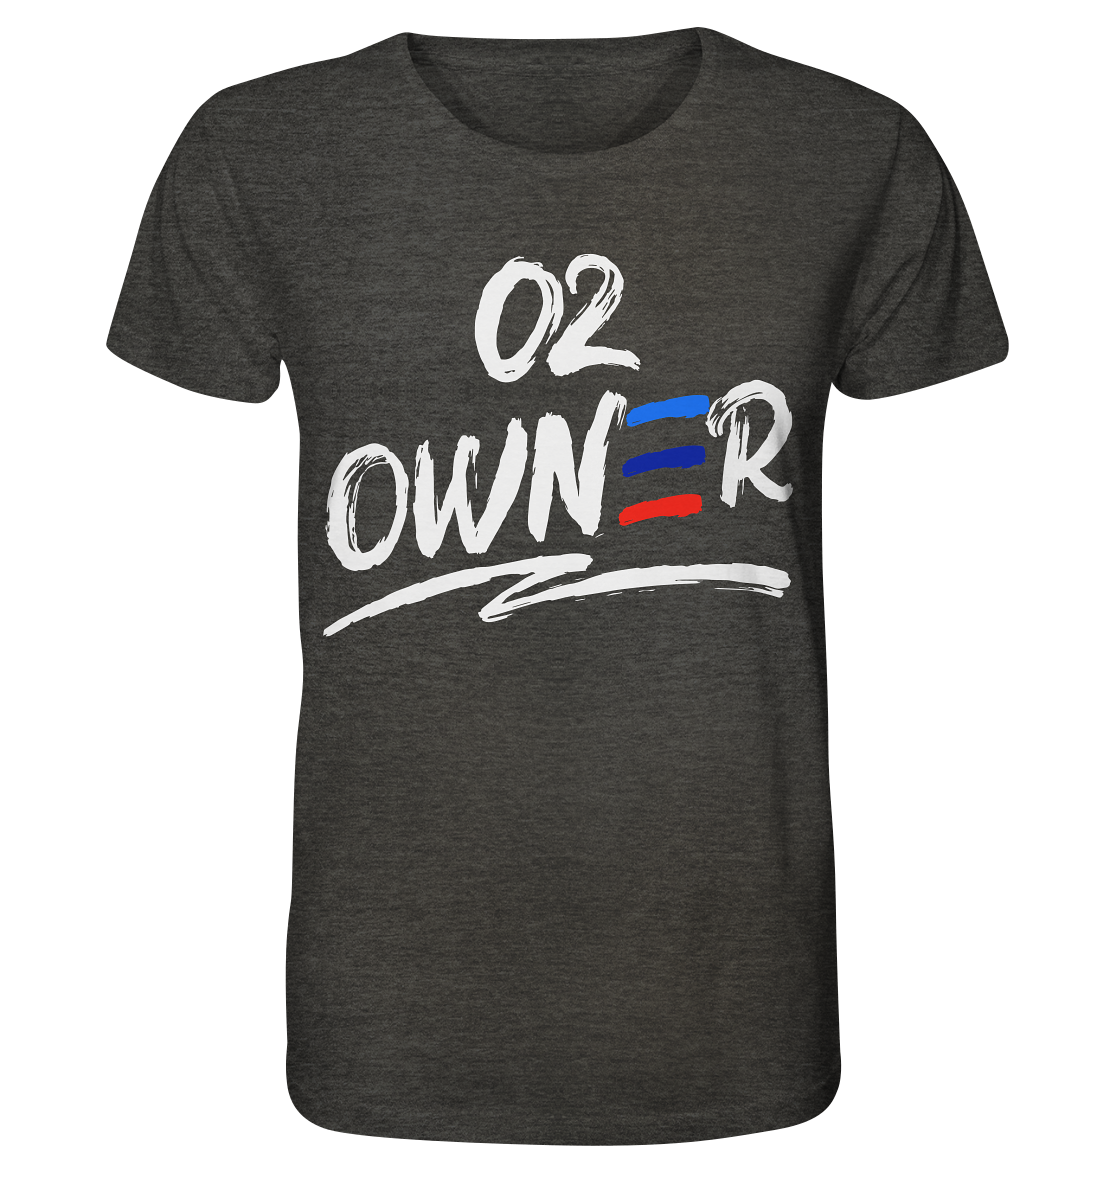 COD_BGK02OWNER - Organic Shirt (meliert)